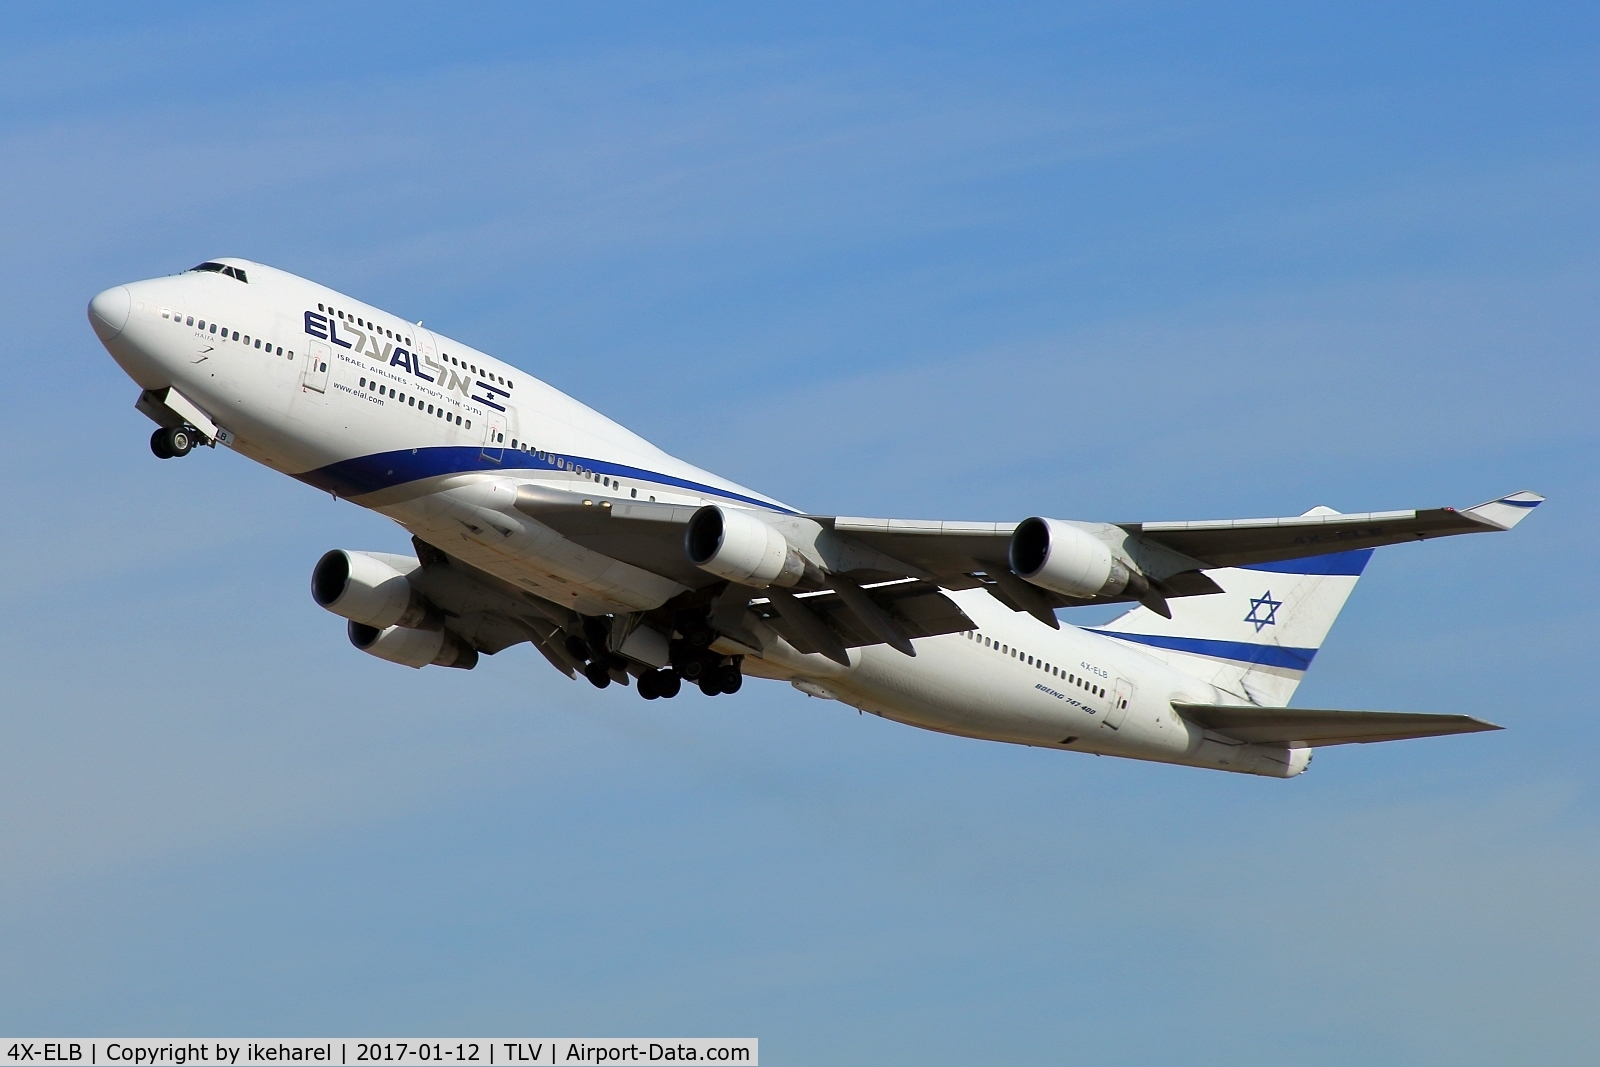 4X-ELB, 1994 Boeing 747-458 C/N 26056, Flight to JFK, NYC, after T/O runway 26.